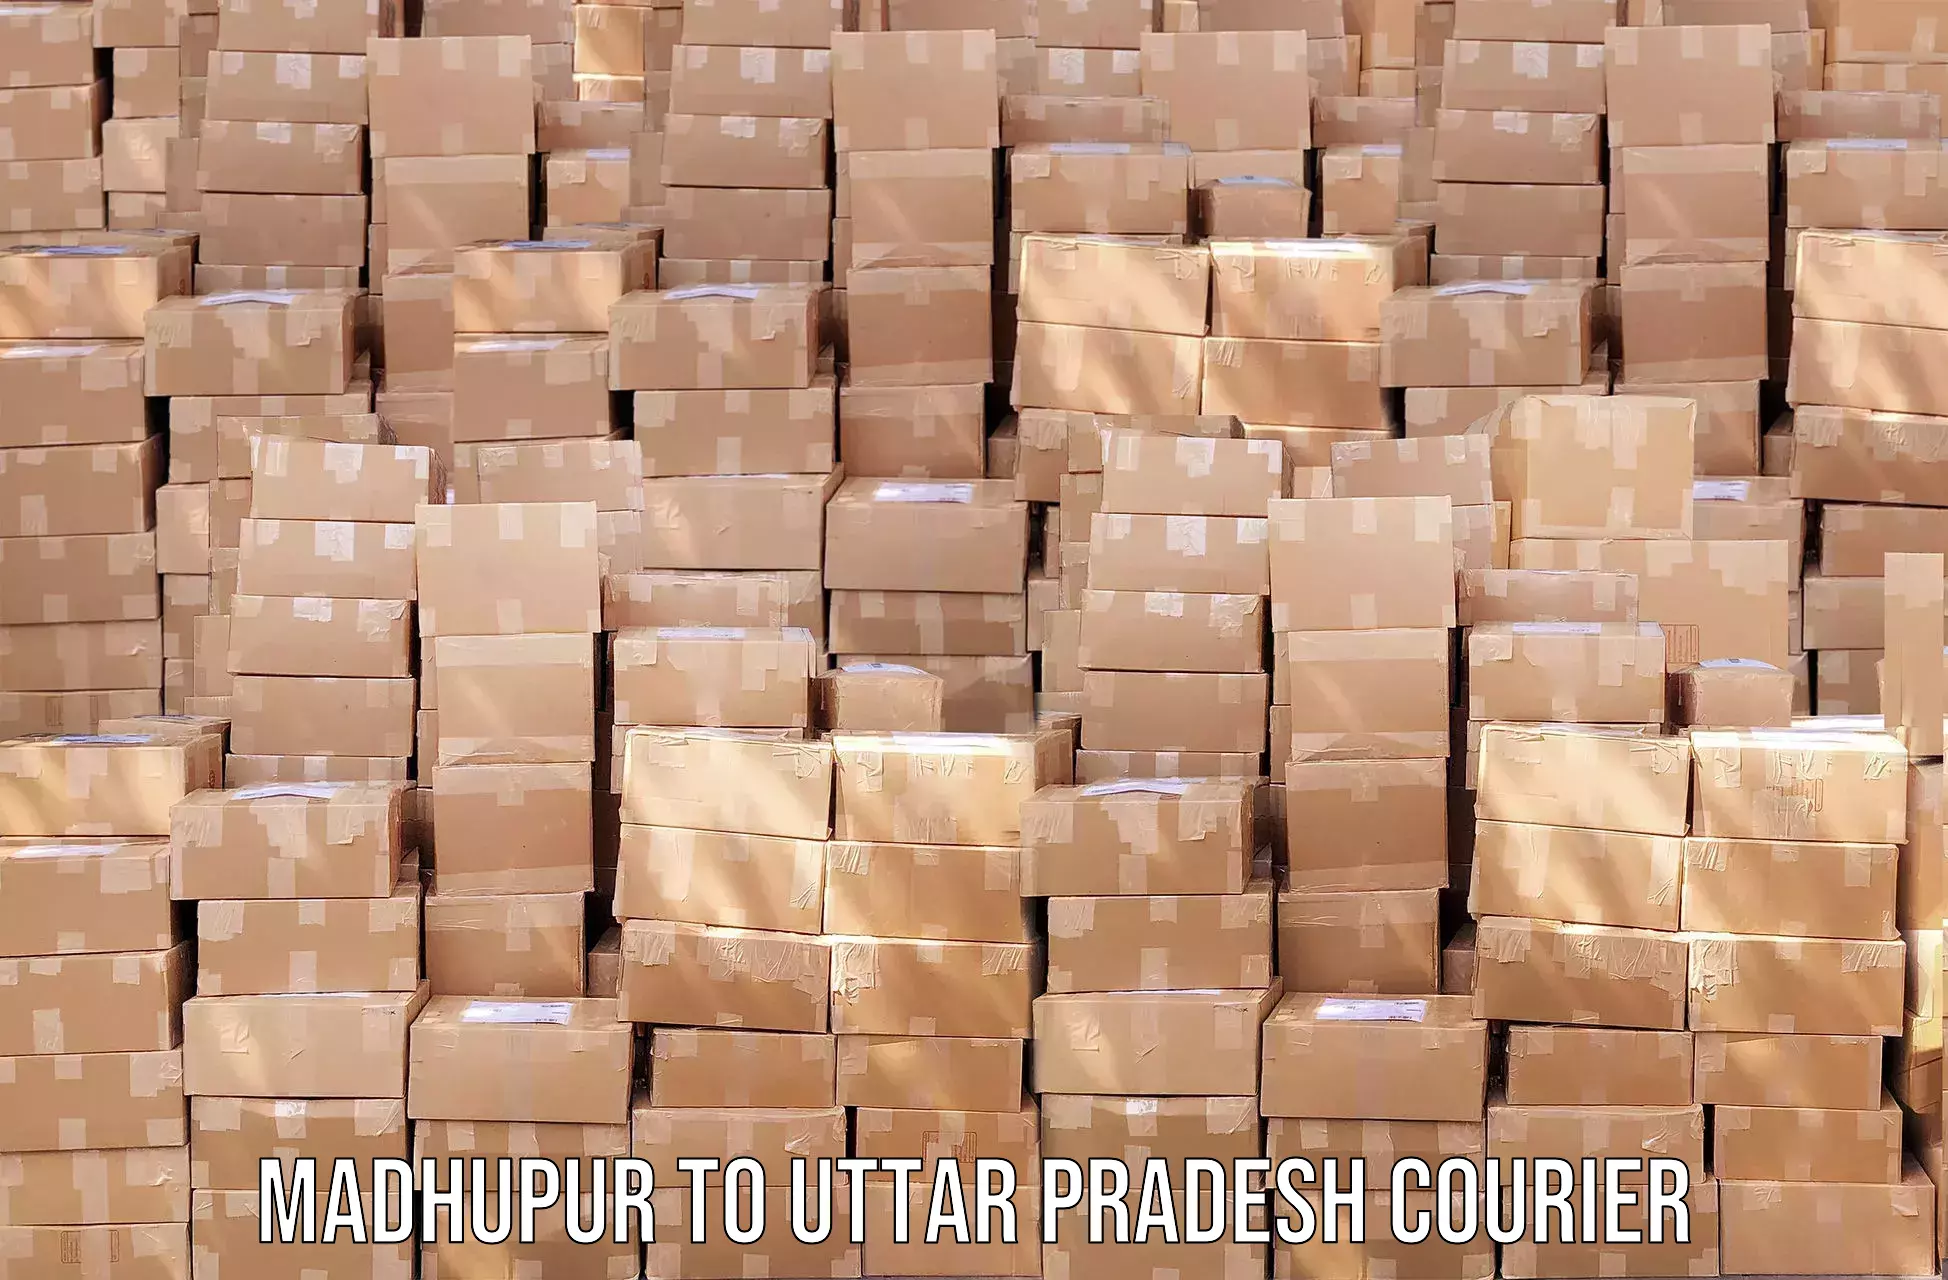 Express postal services Madhupur to Sirathu